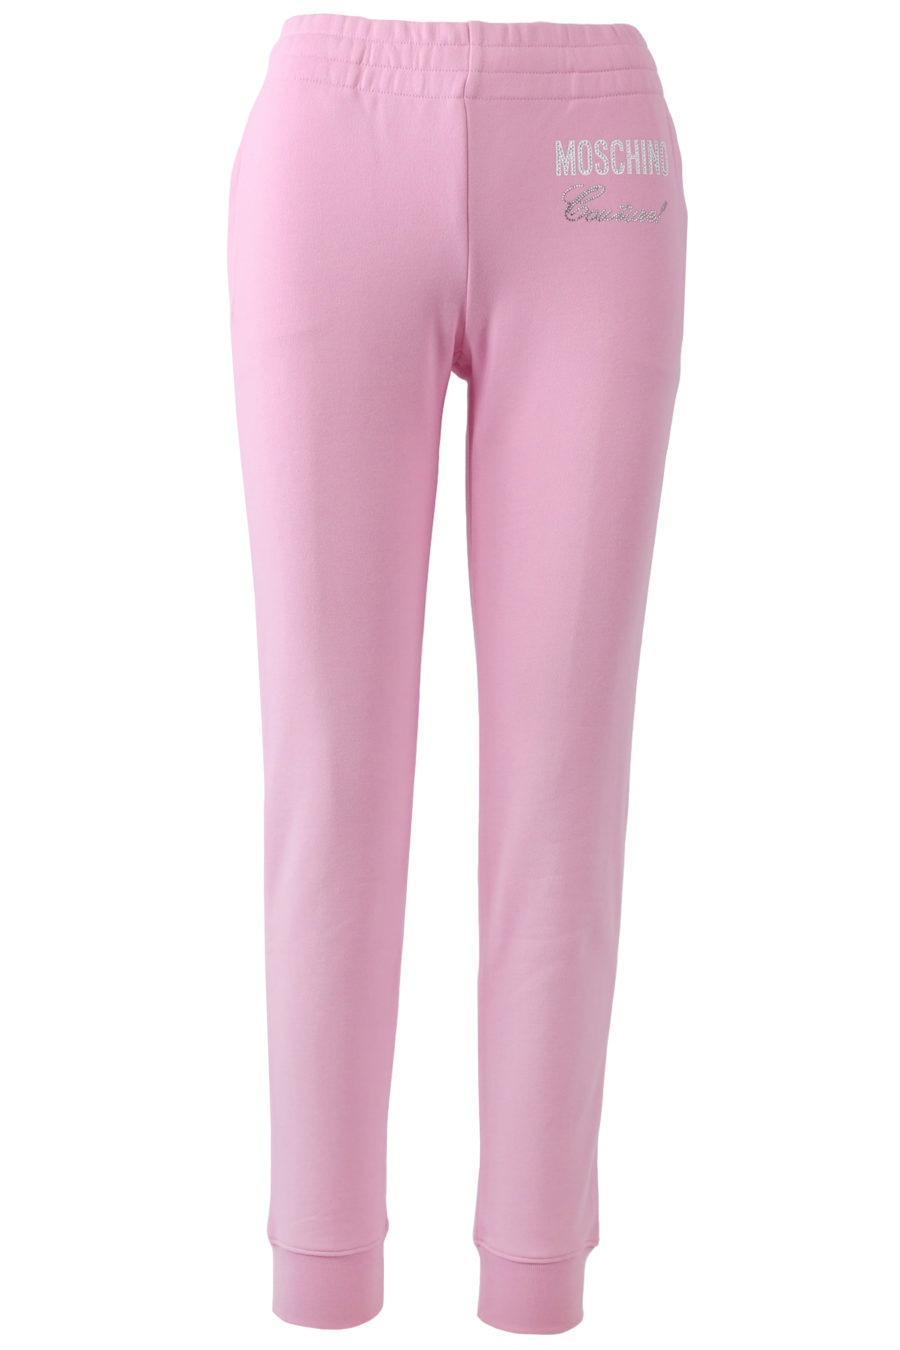 Pantalón de color rosa con logo de cristales - IMG 7269 copia